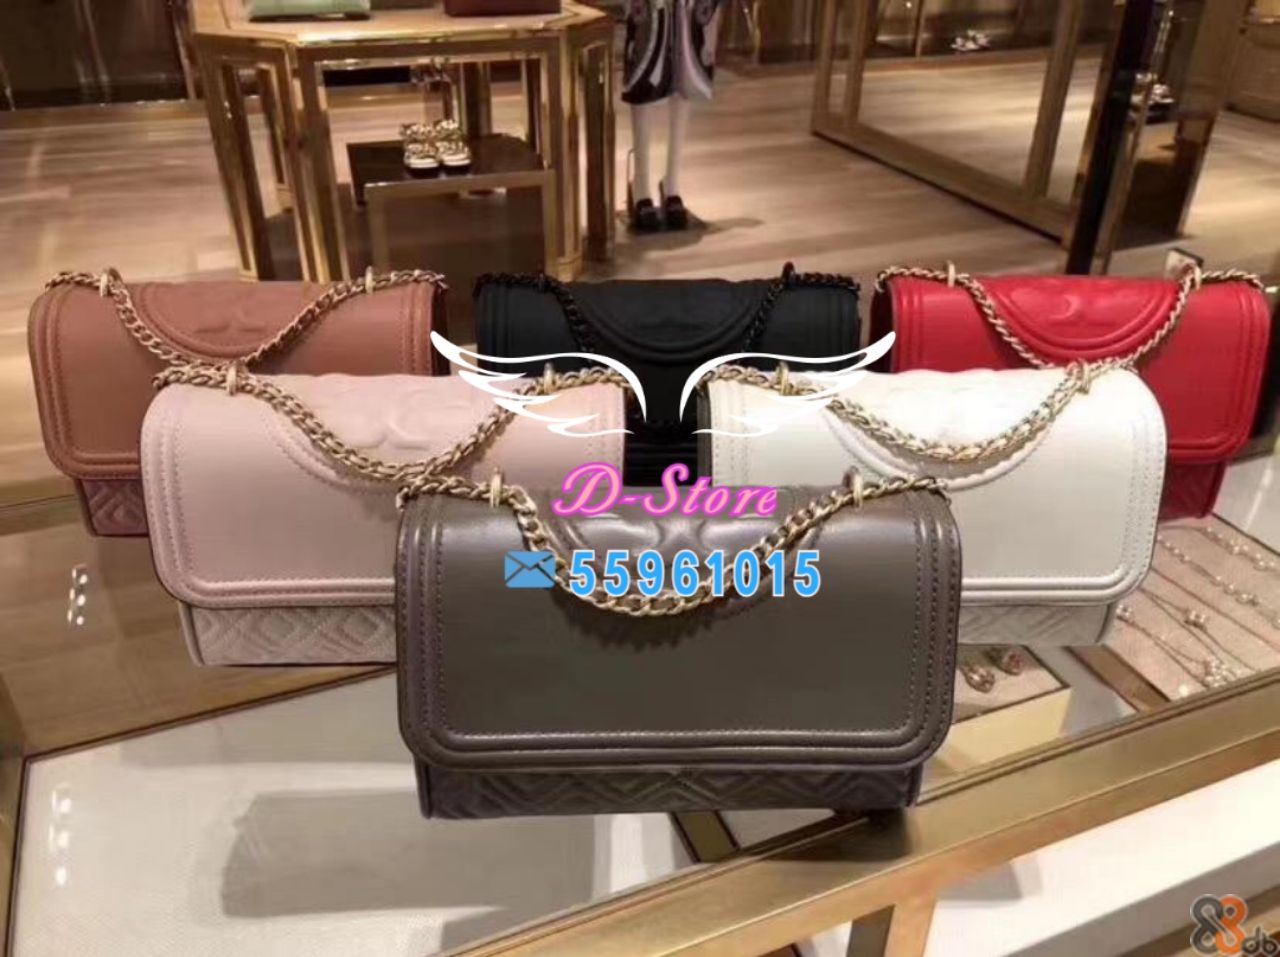 DeStore 55961015  Handbag,Bag,Product,Pink,Fashion accessory